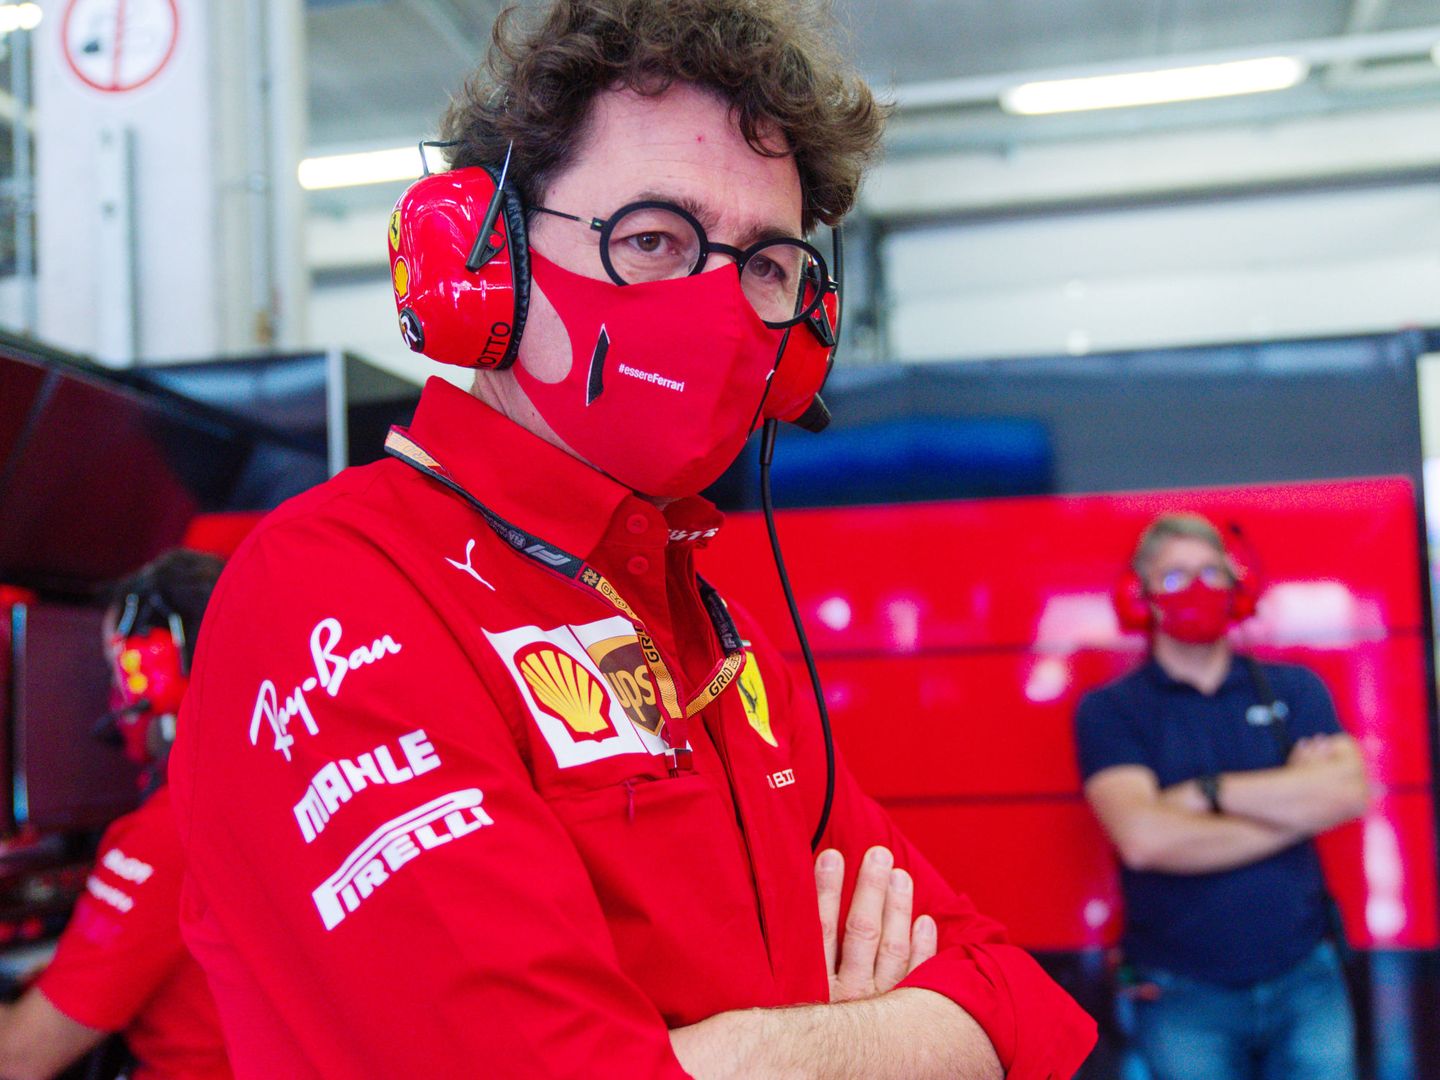 Elkan ha confirmado su confianza en Mattia Binotto para liderar el proyecto de Ferrari a partir de 2020 (EFE)